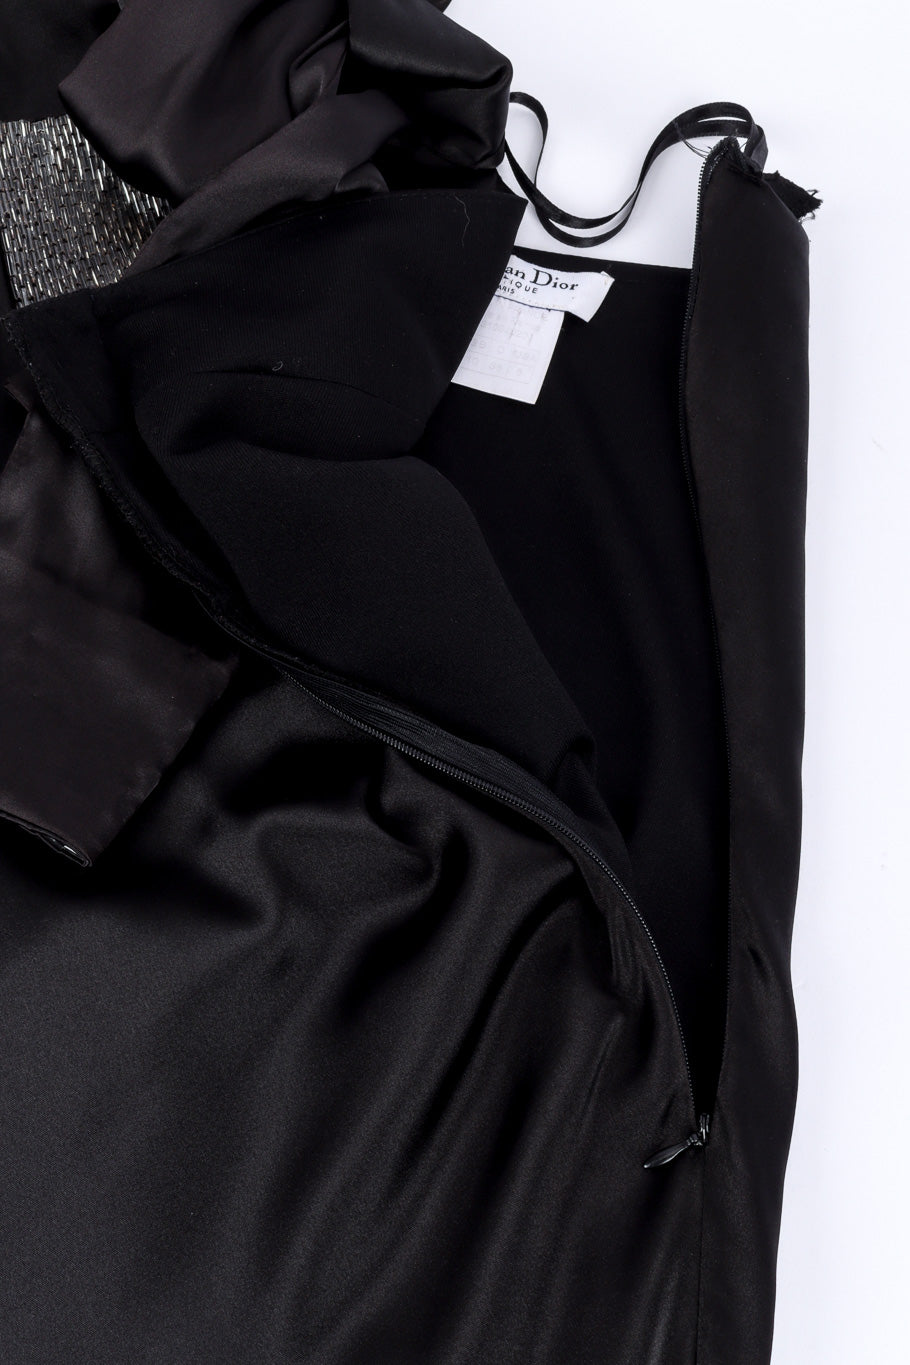 Christian Dior Silk Beaded Halter Dress zipper closure closeup @recessla